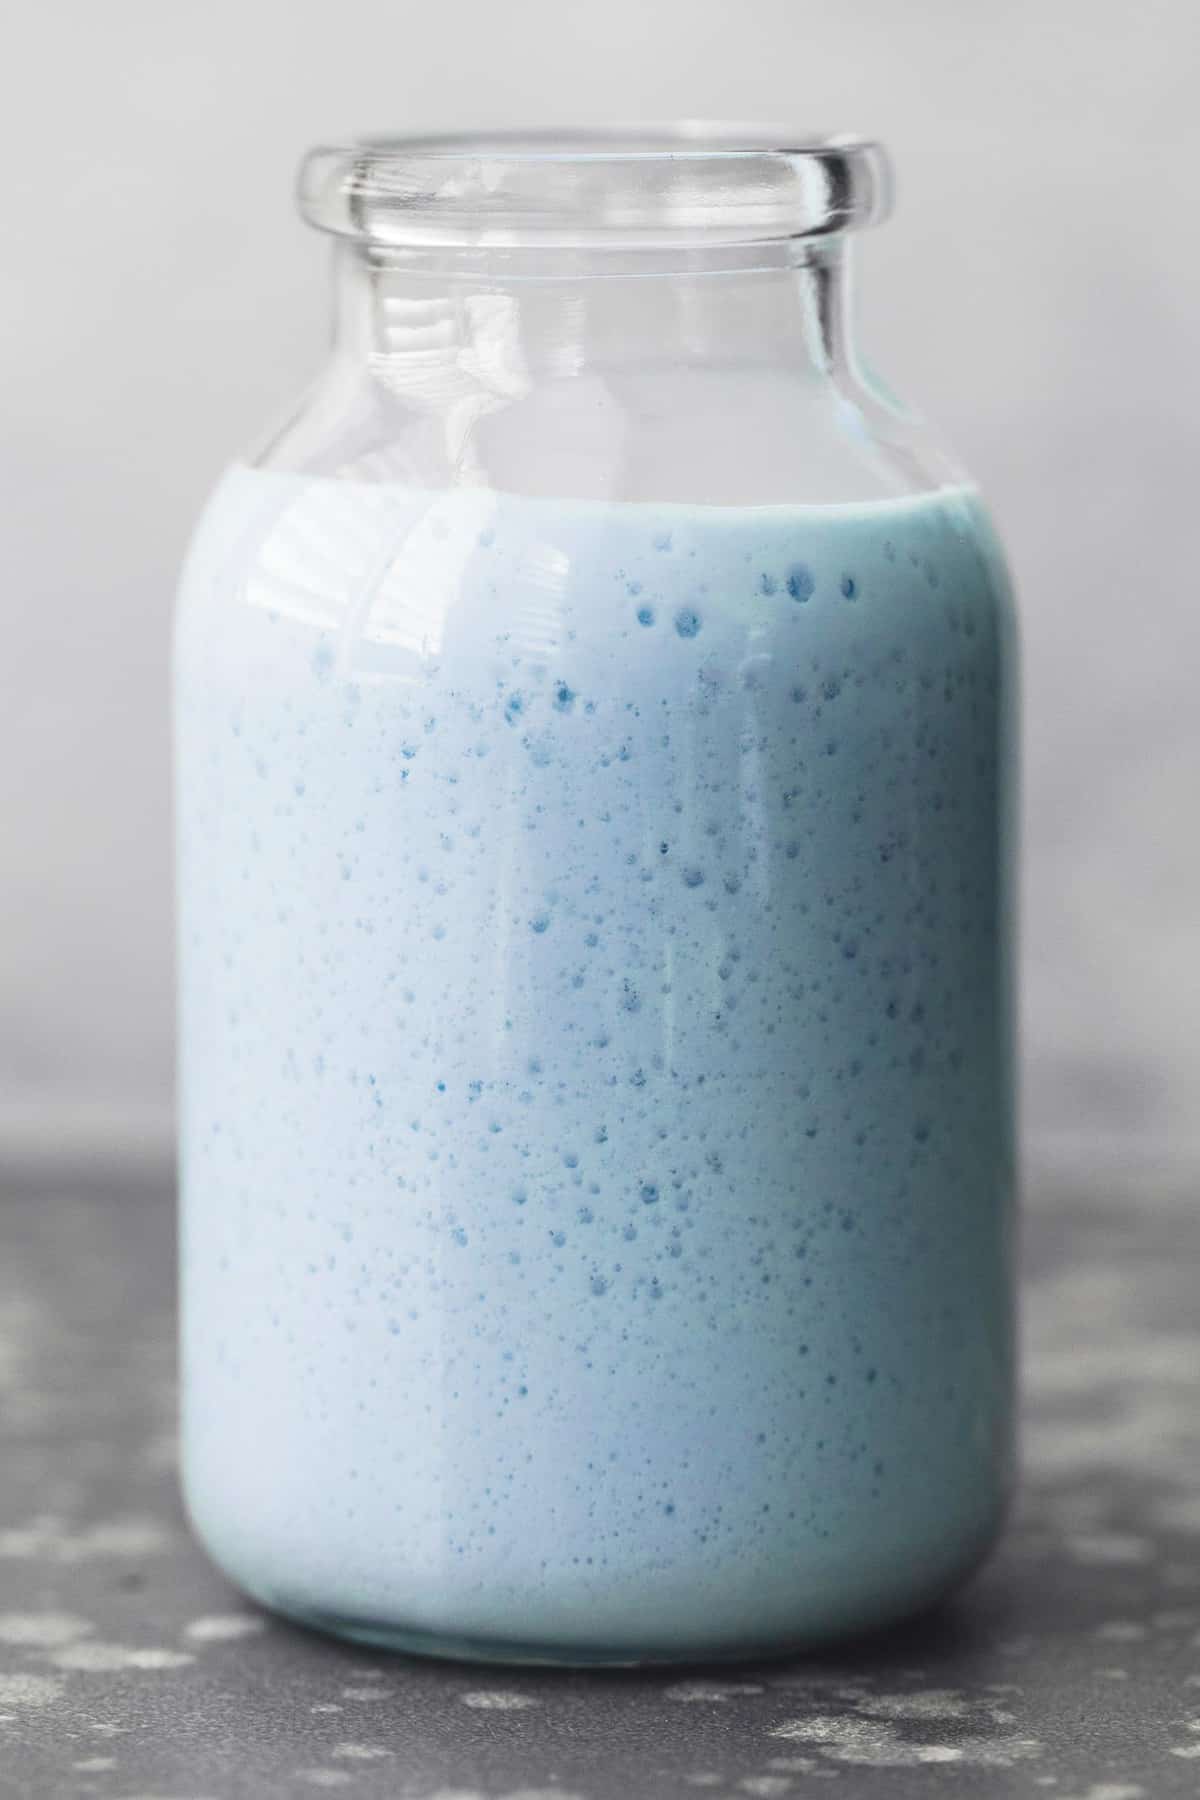 galaxy's edge blue milk (Disneyland Copycat) in a glass jar.